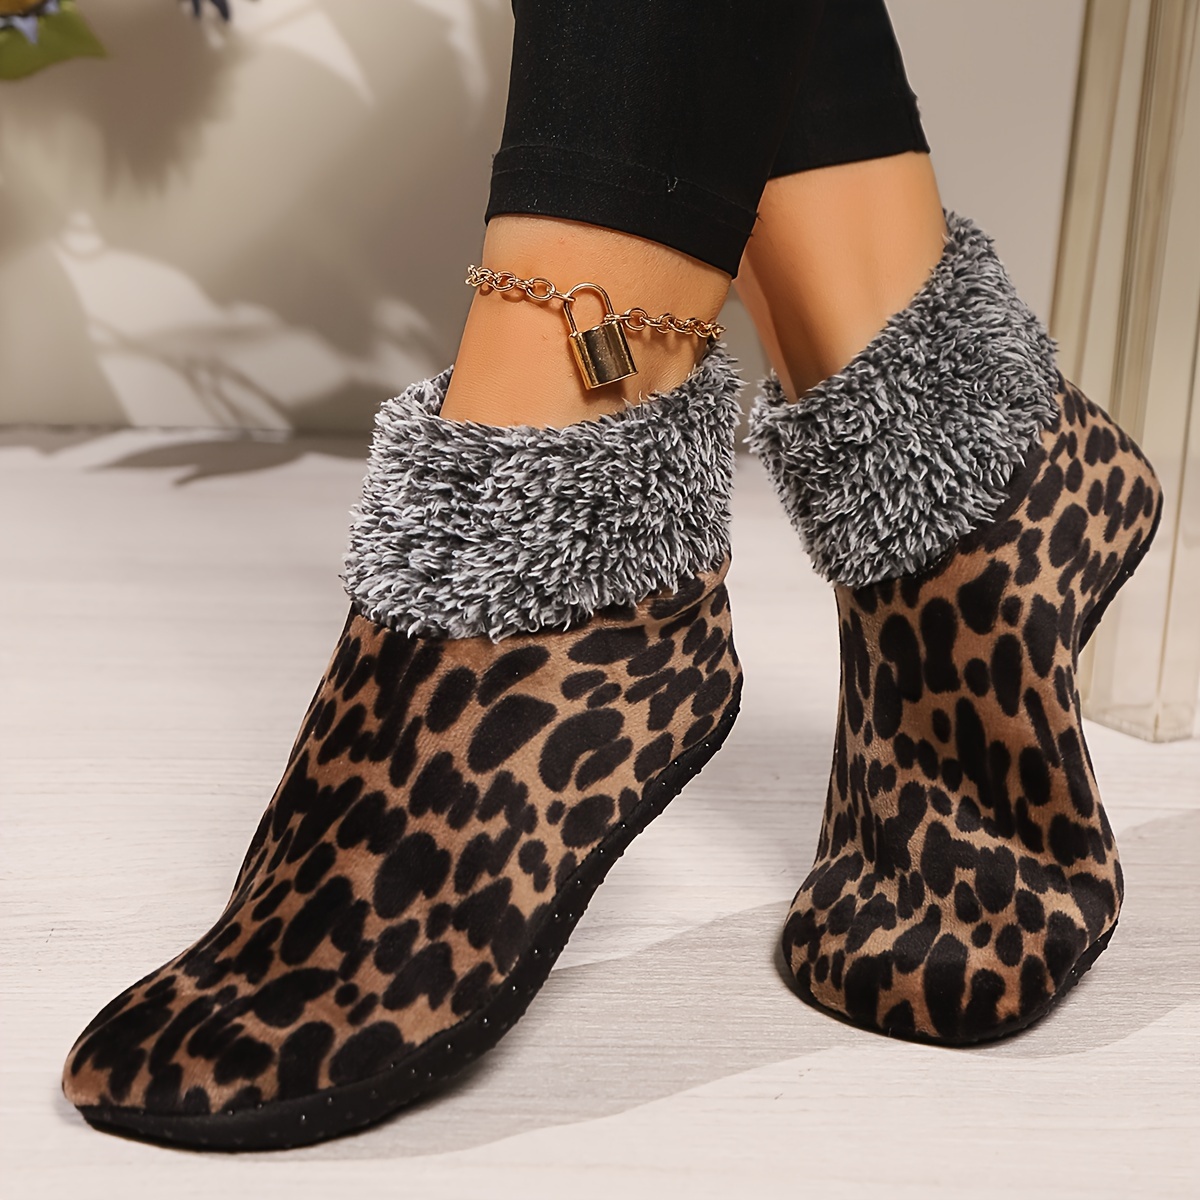 

Non-slip Leopard Print Socks, Soft Cozy Home Indoor Winter Thermal Fleece Slipper Socks, Women's Stockings & Hosiery